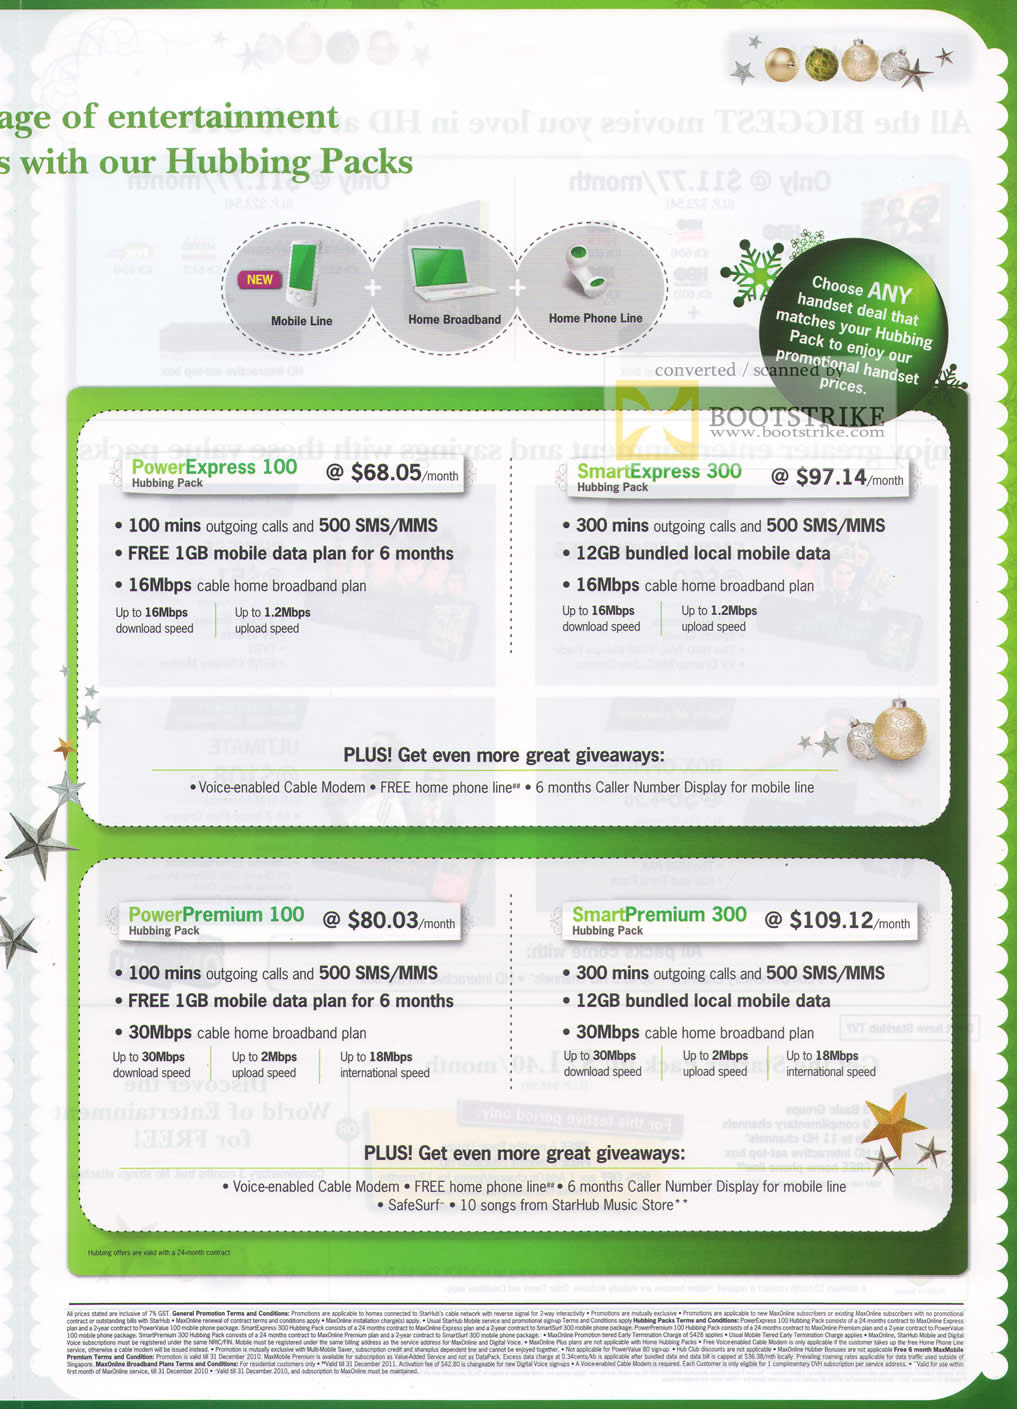 Sitex 2010 price list image brochure of Starhub Hubbing Pack PowerExpress 100 SmartExpress 300 PowerPremium 100 300